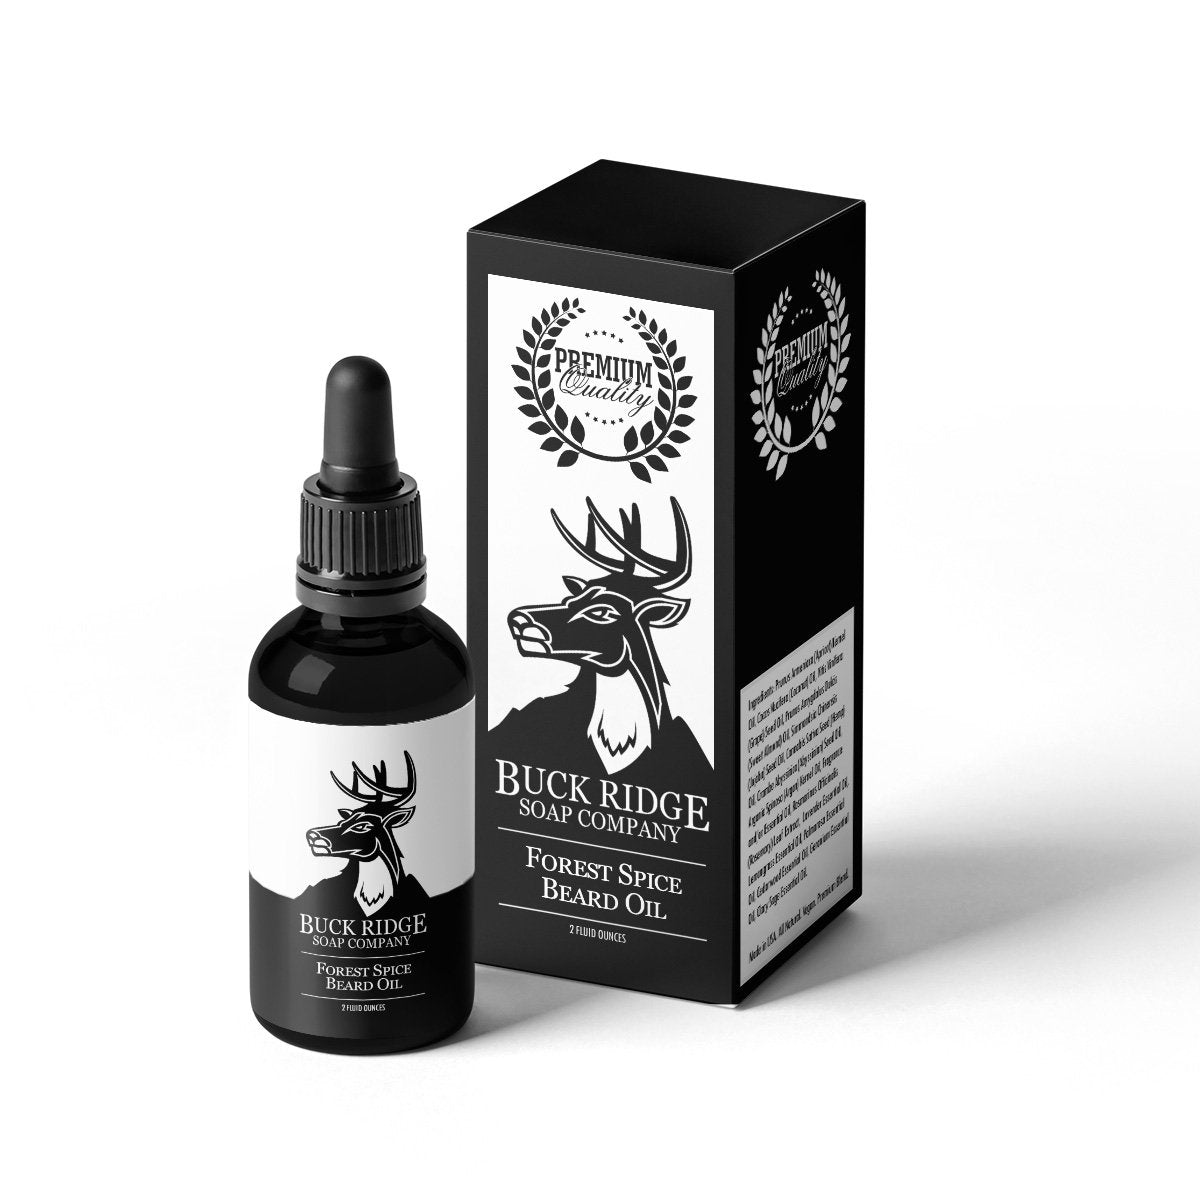 Forest Spice Beard Oil